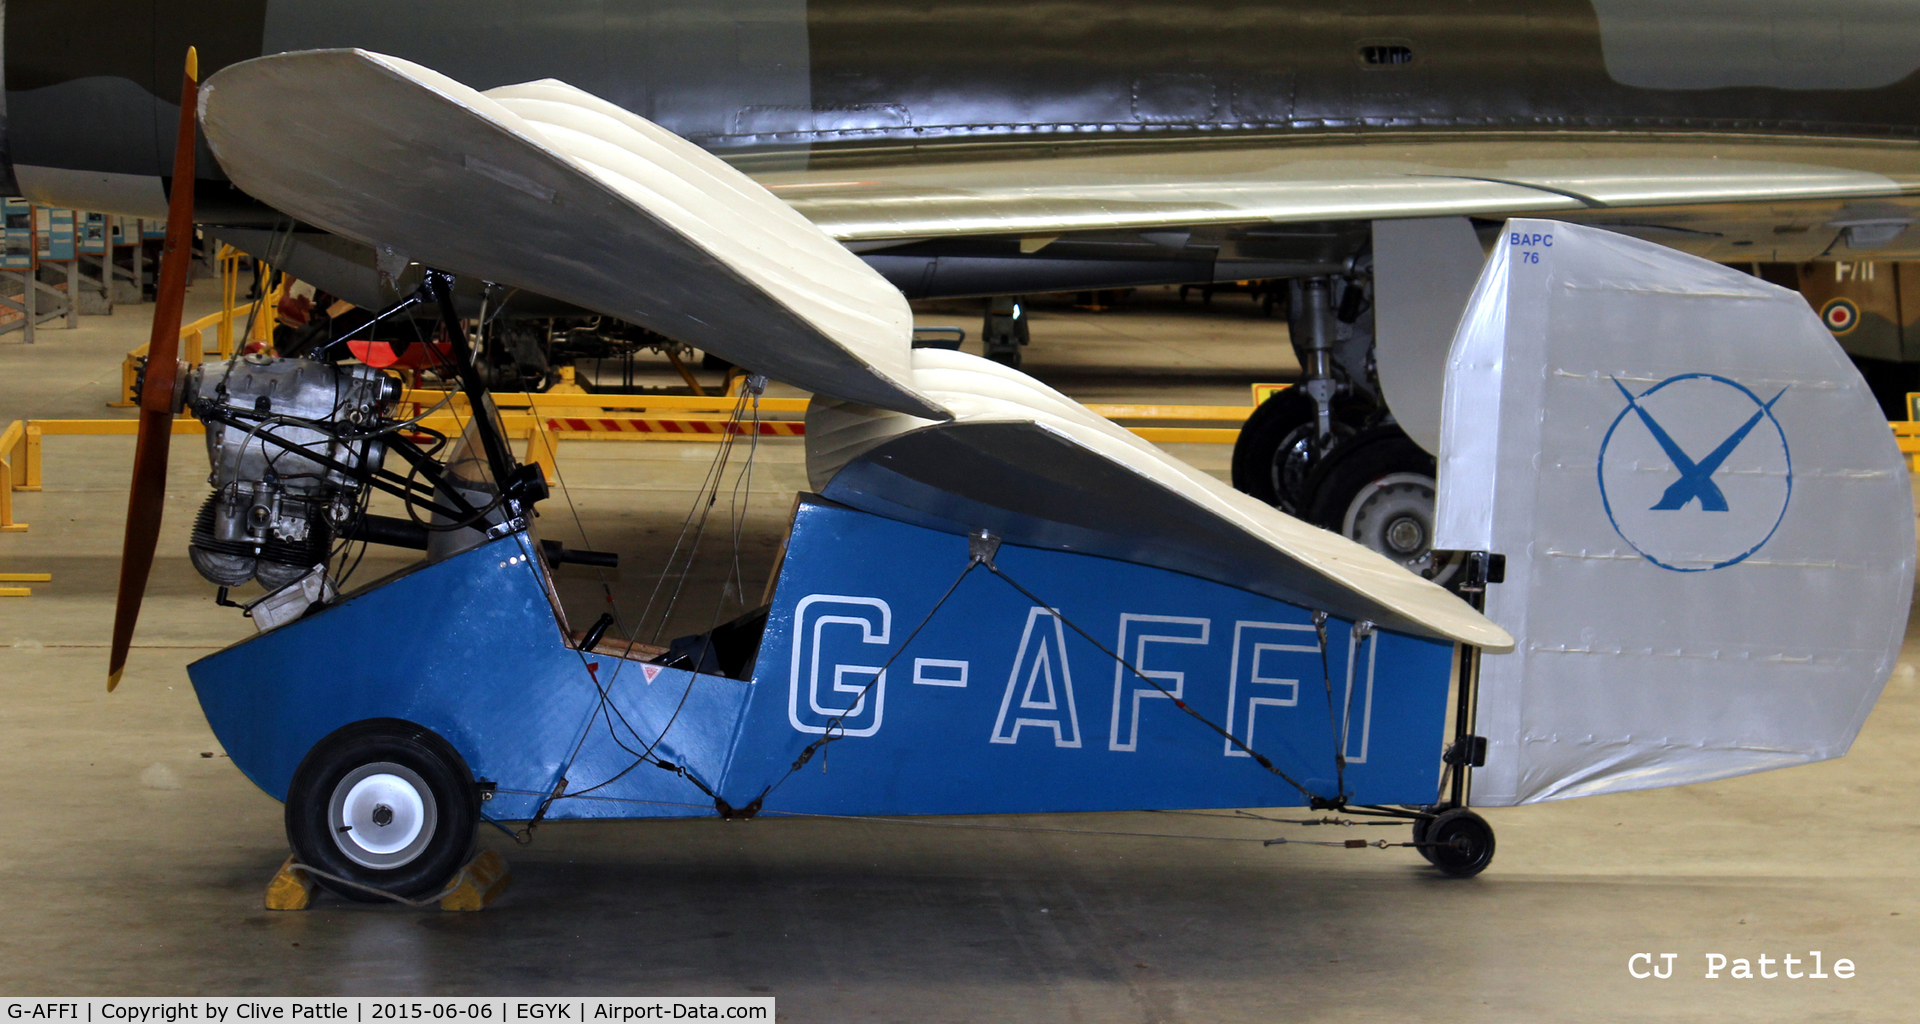 G-AFFI, Mignet HM.14 Pou-du-Ciel C/N BAPC74, On display at the Yorkshire Air Museum, Elvington, Yorks, UK former EGYK